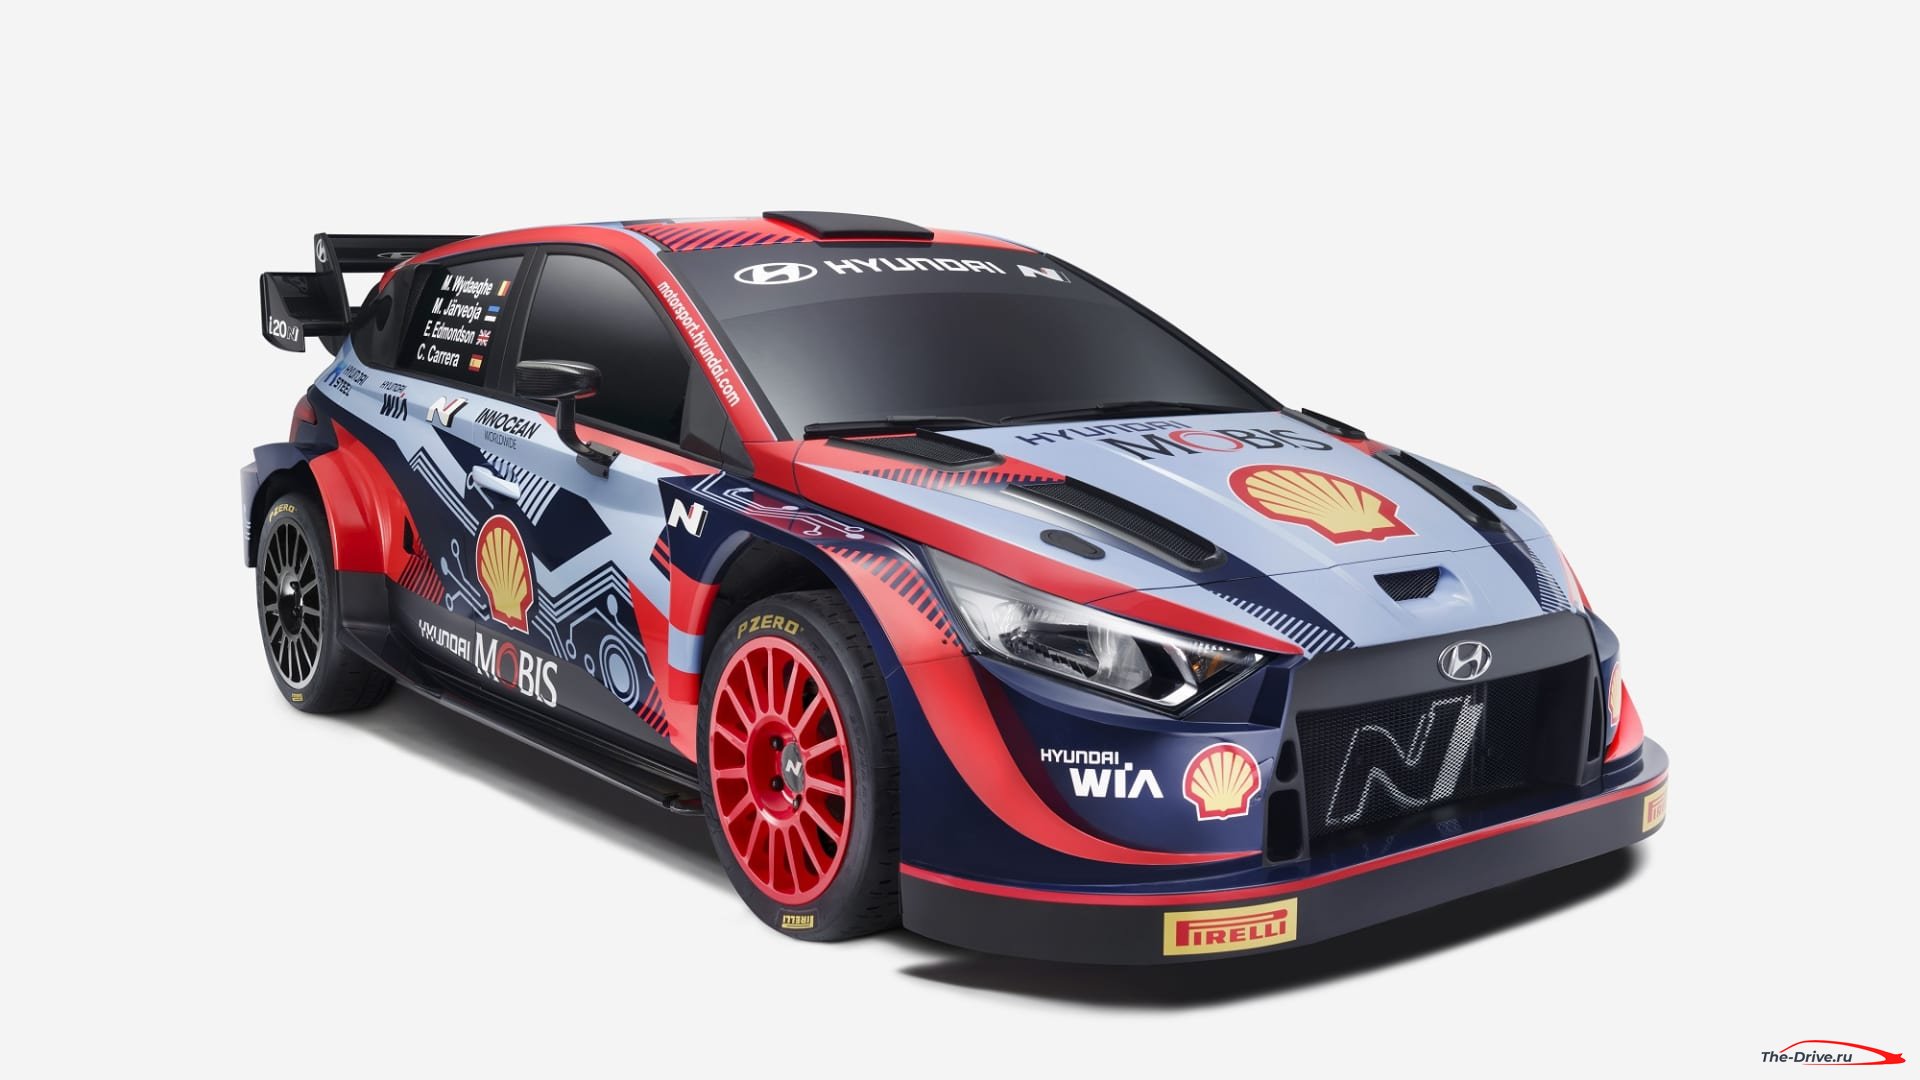 Гибридный хот-хэтч Hyundai i20 N примет участие в ралли WRC